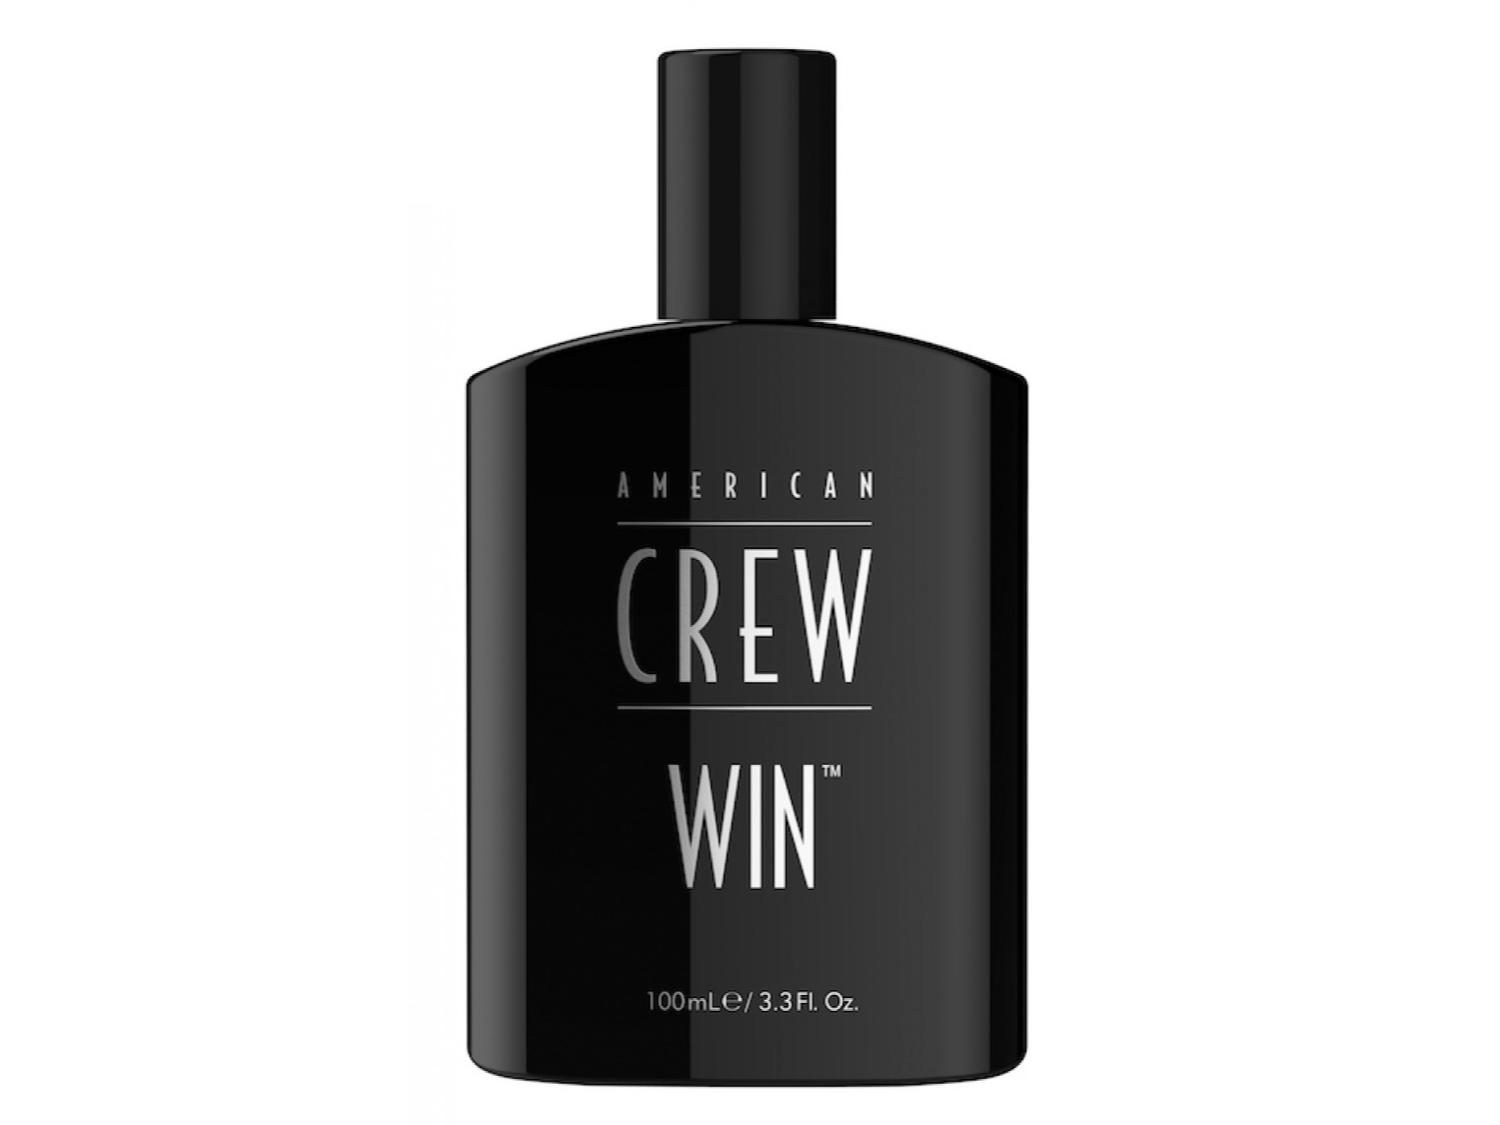 Arma Beauty - American Crew - Win Fragrance